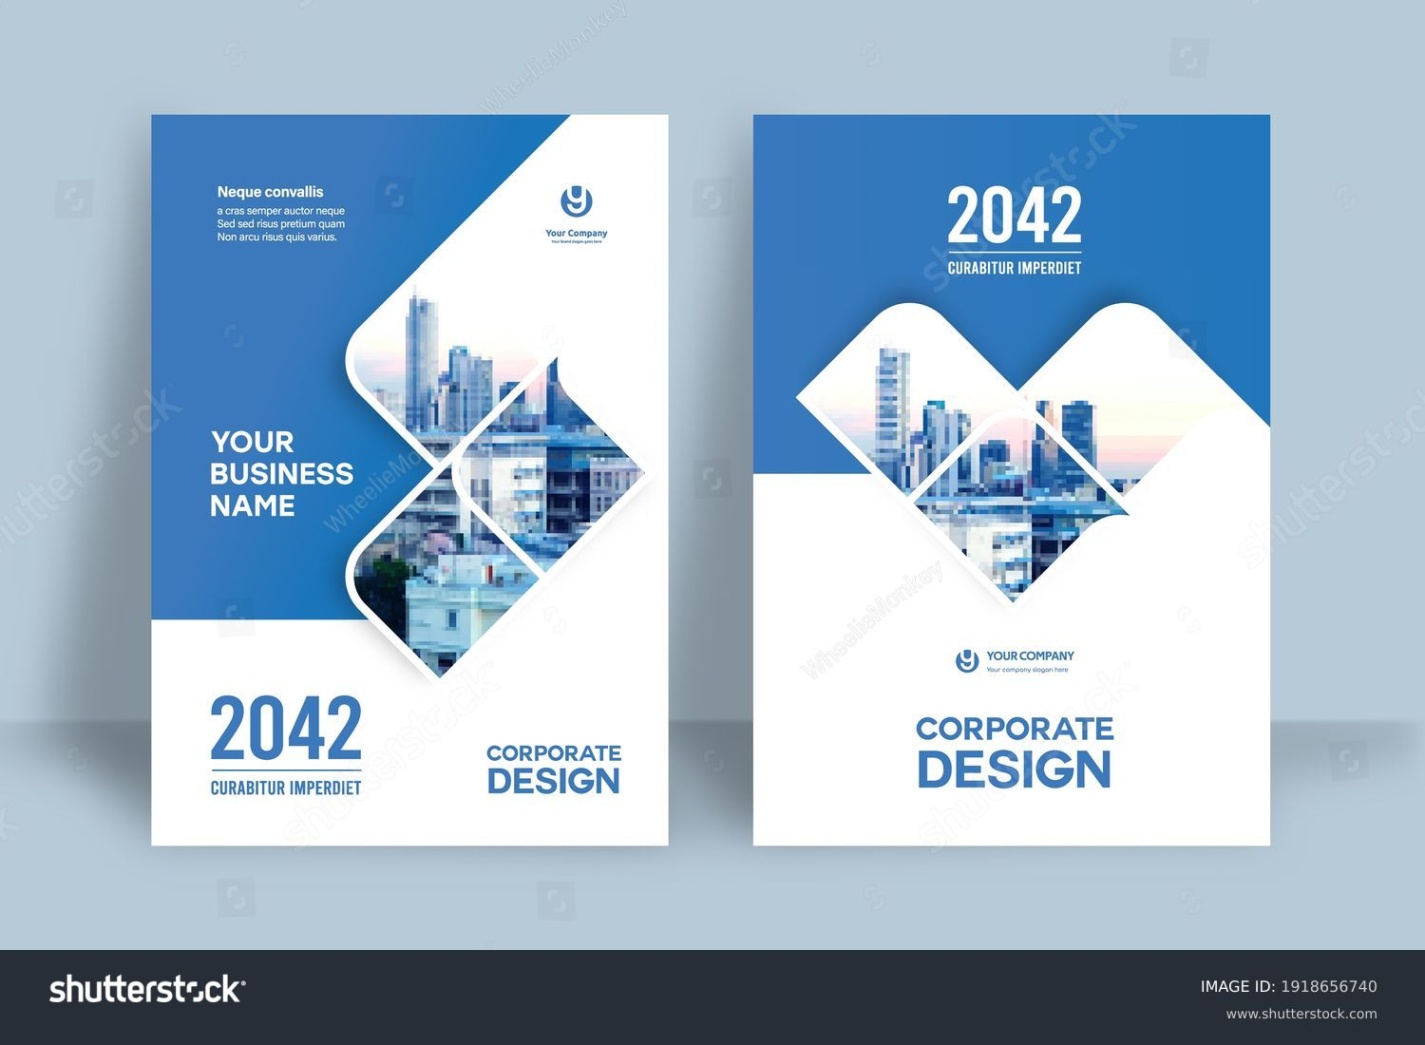 annual report cover design Bulan 2 www.shutterstock